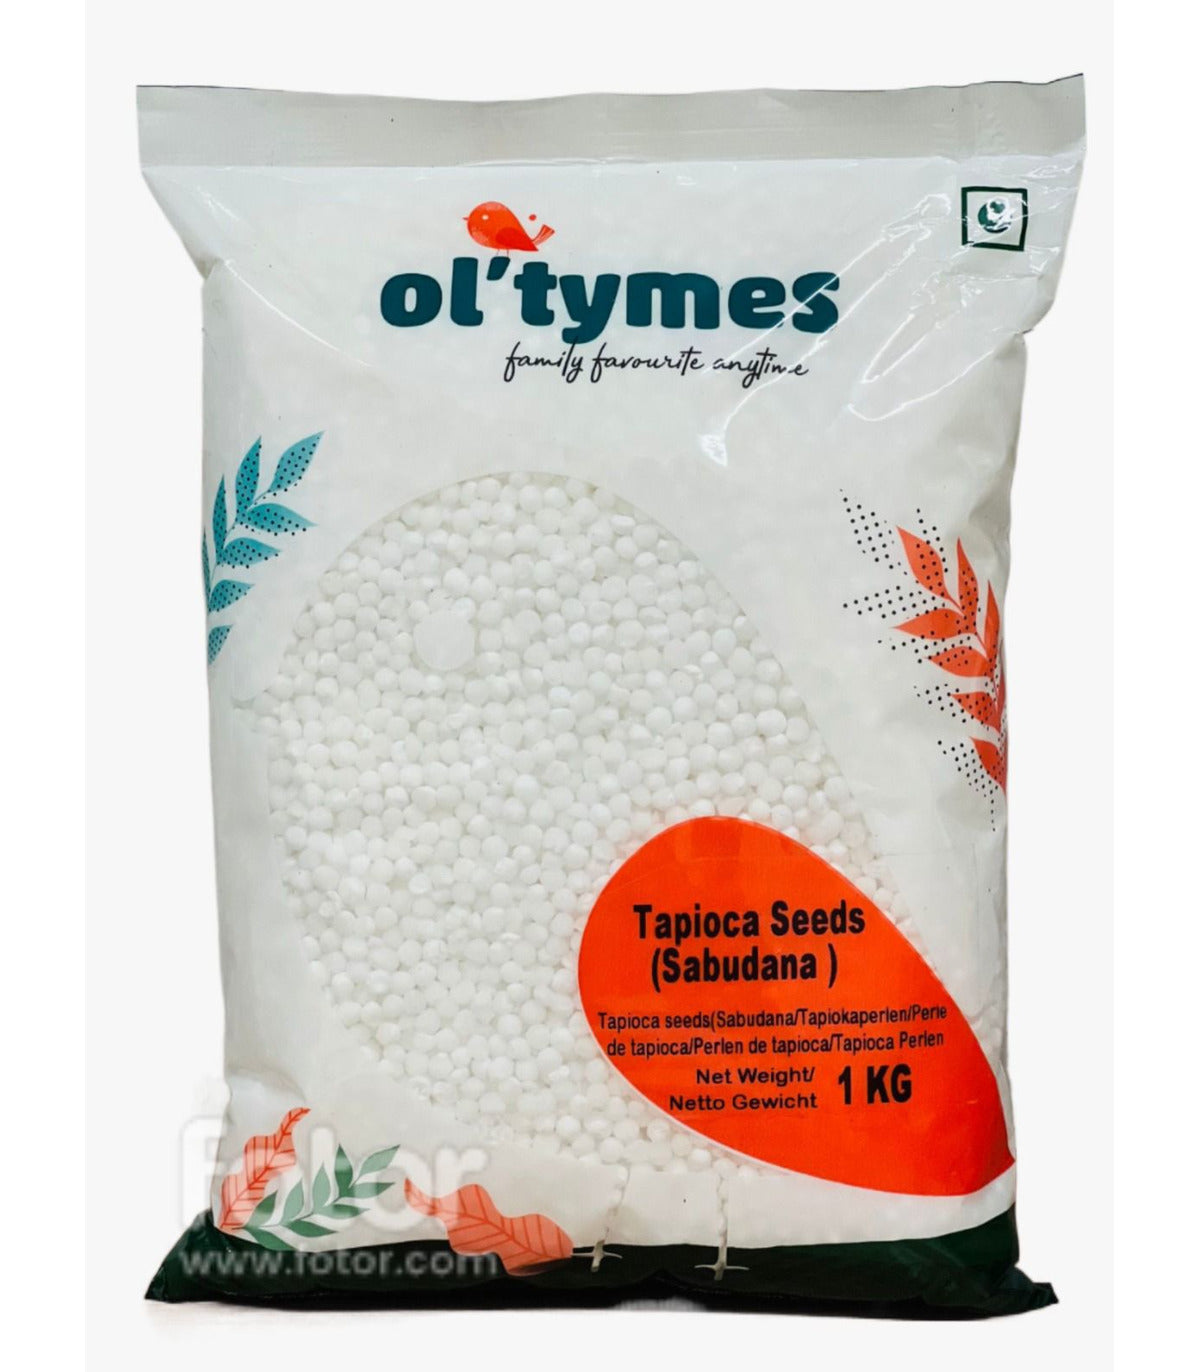 Ol' Tymes Tapioca Seeds (Sabudana) 1kg